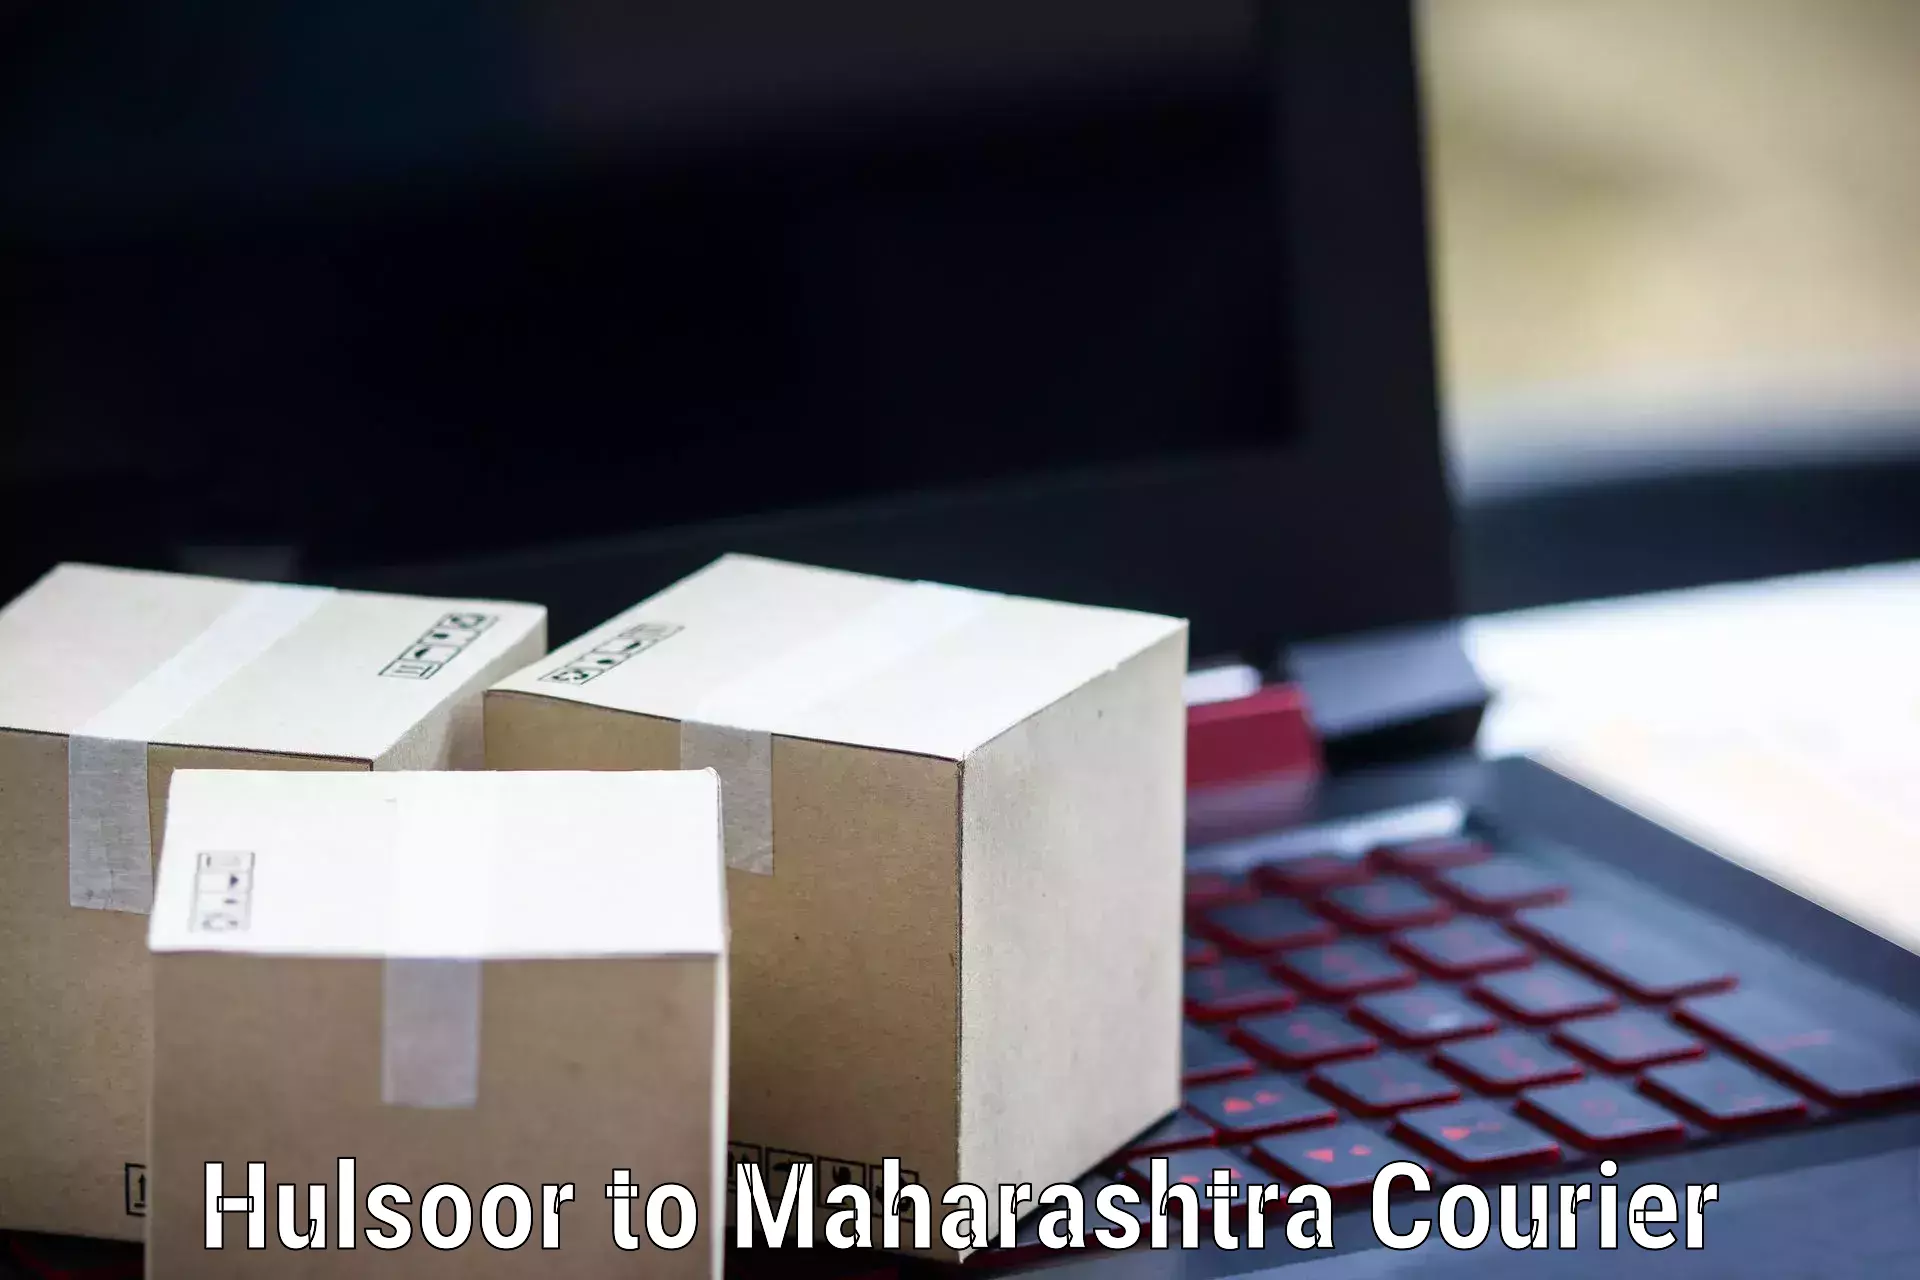 Cash on delivery service Hulsoor to Maharashtra